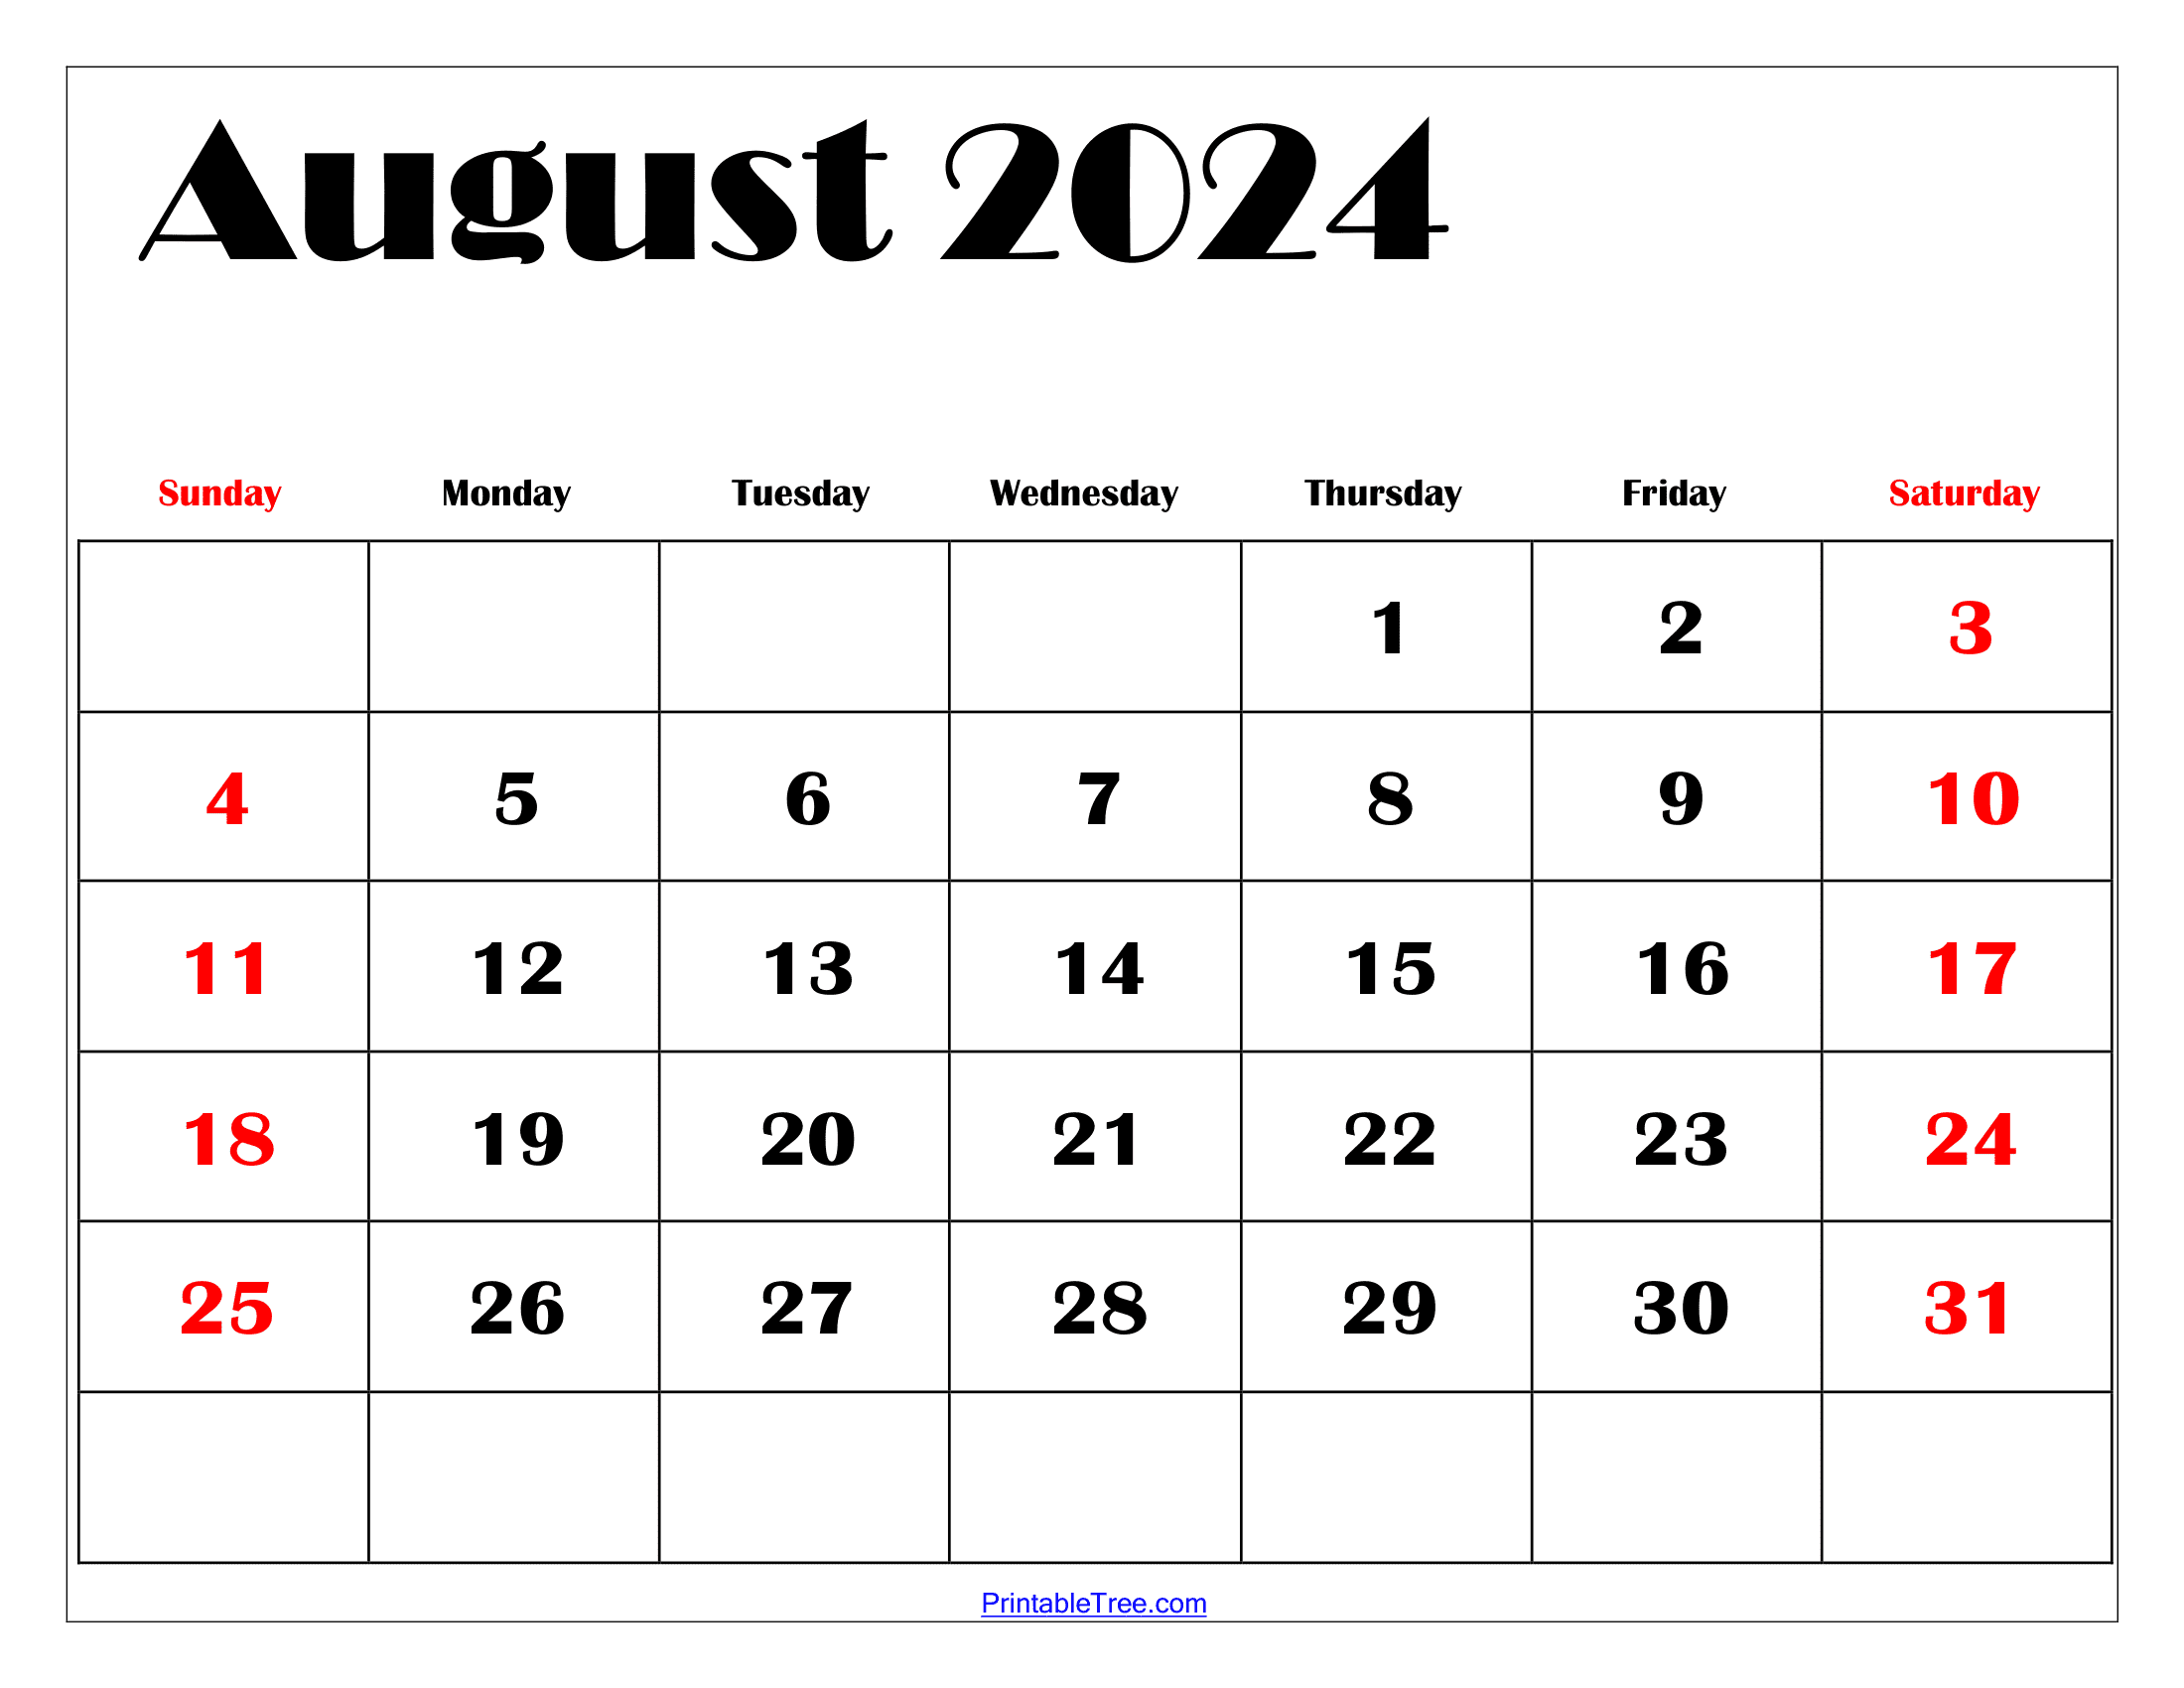 August 2024 Calendar Printable Pdf Templates Free Download for Calendar Template August 2024 Printable